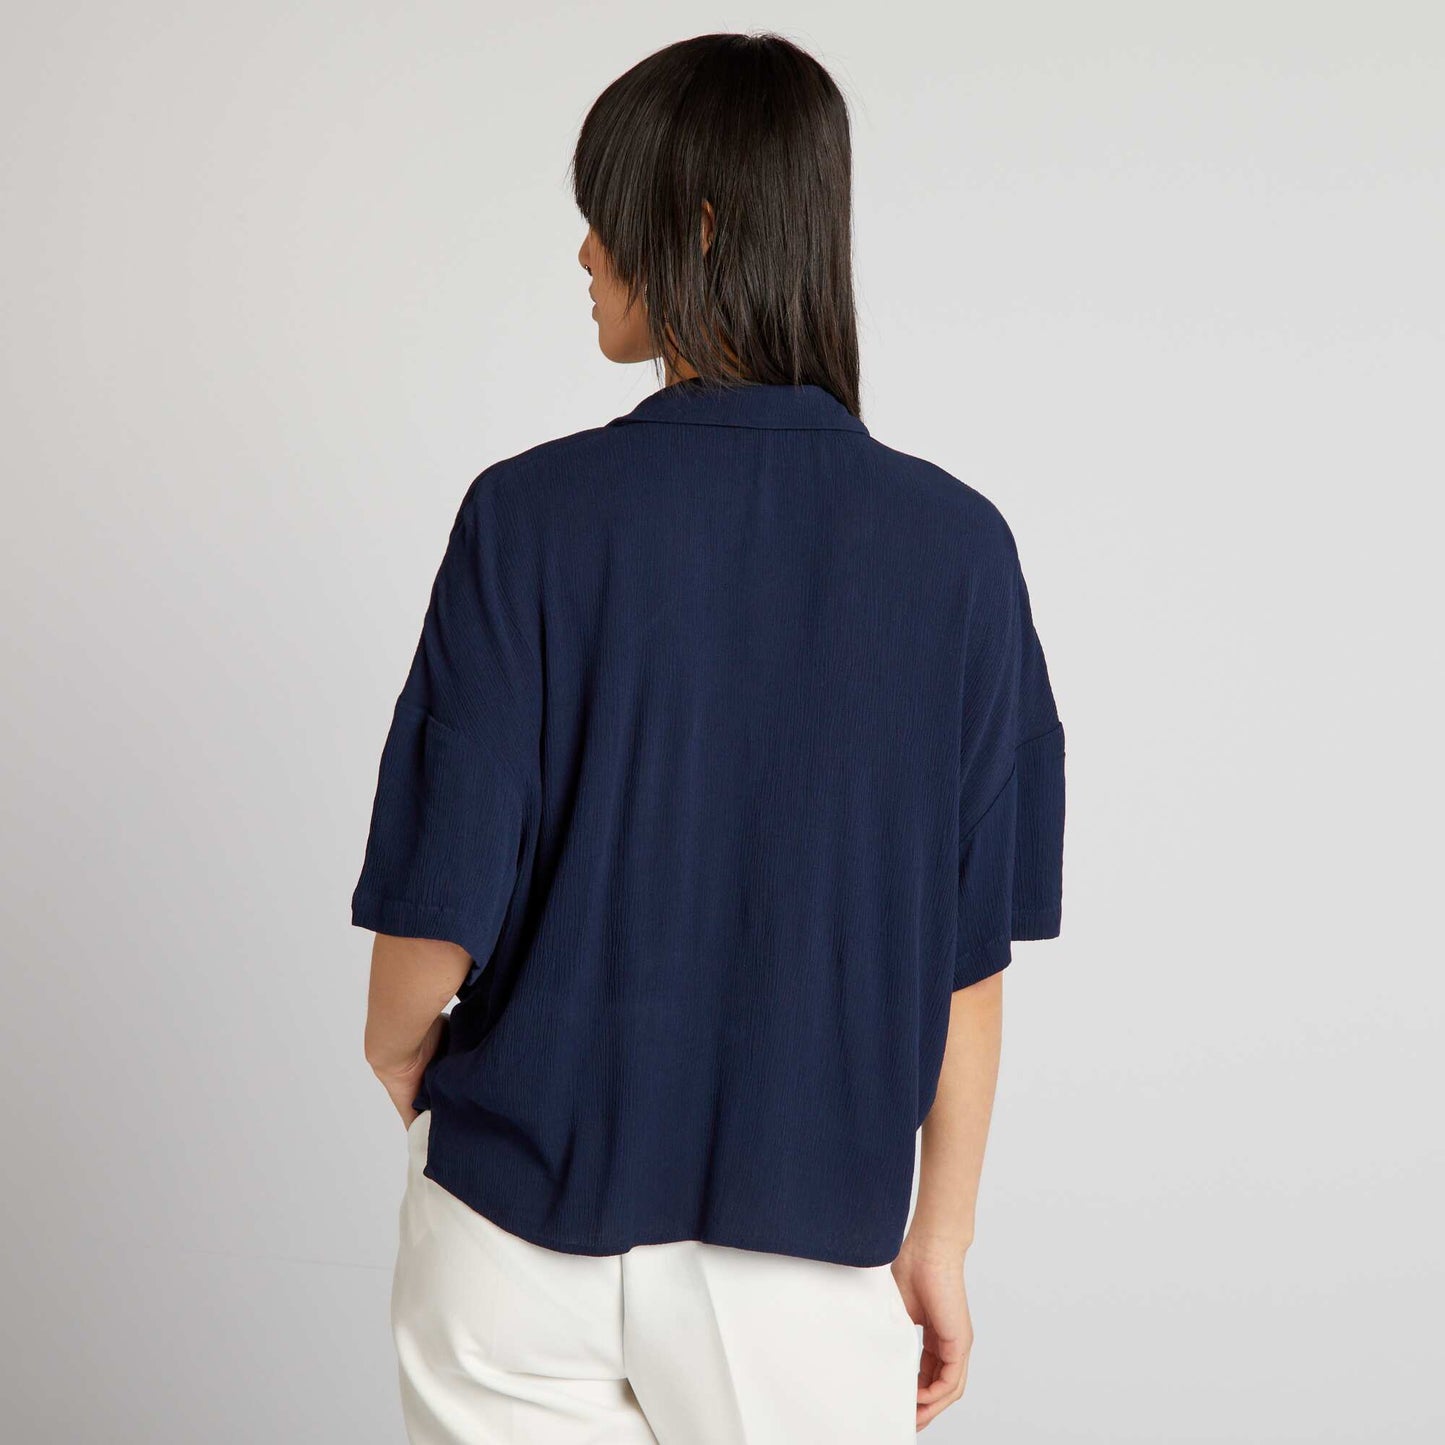 Short-sleeved crêpe knit fabric blouse BLACK